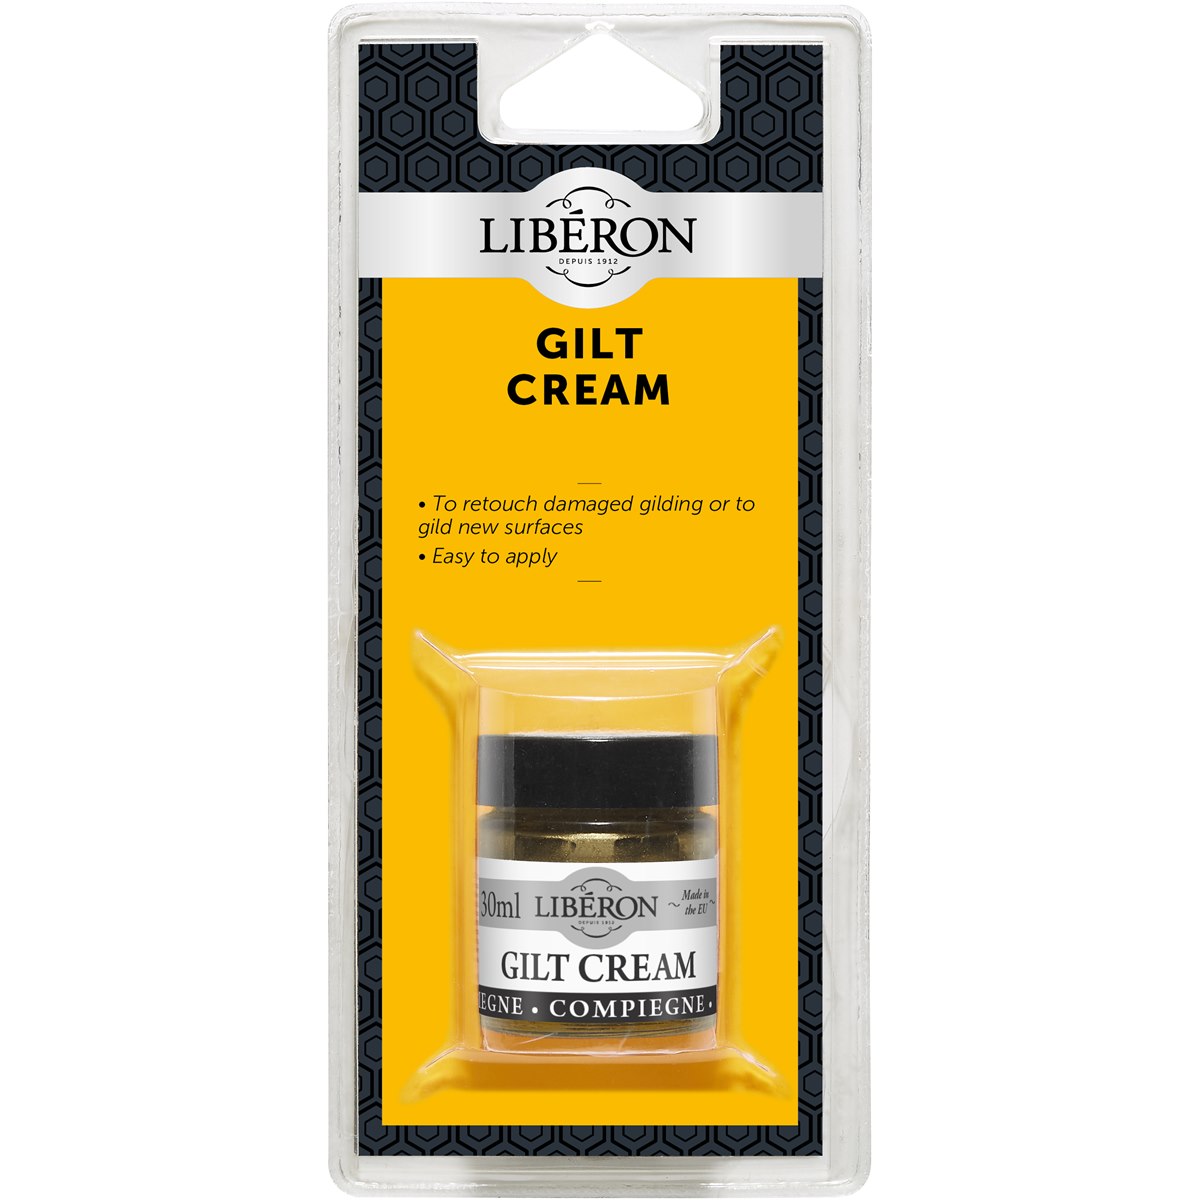 Liberon Gilt Cream Compeigne 100ml